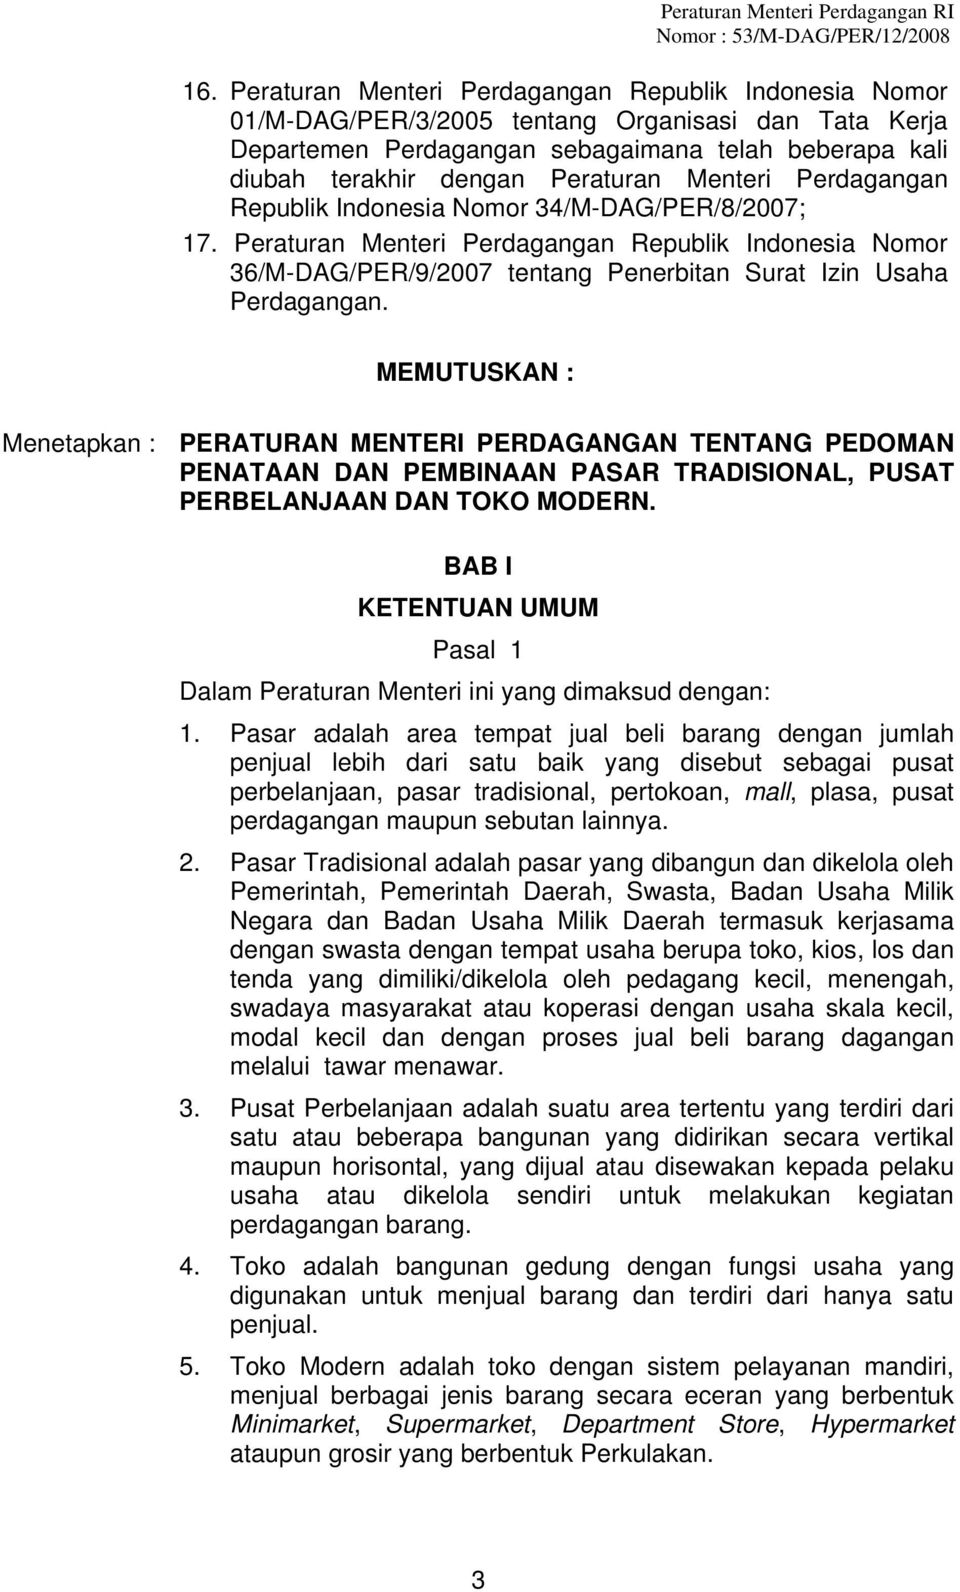 Peraturan Menteri Perdagangan Republik Indonesia Nomor 36/M-DAG/PER/9/2007 tentang Penerbitan Surat Izin Usaha Perdagangan.